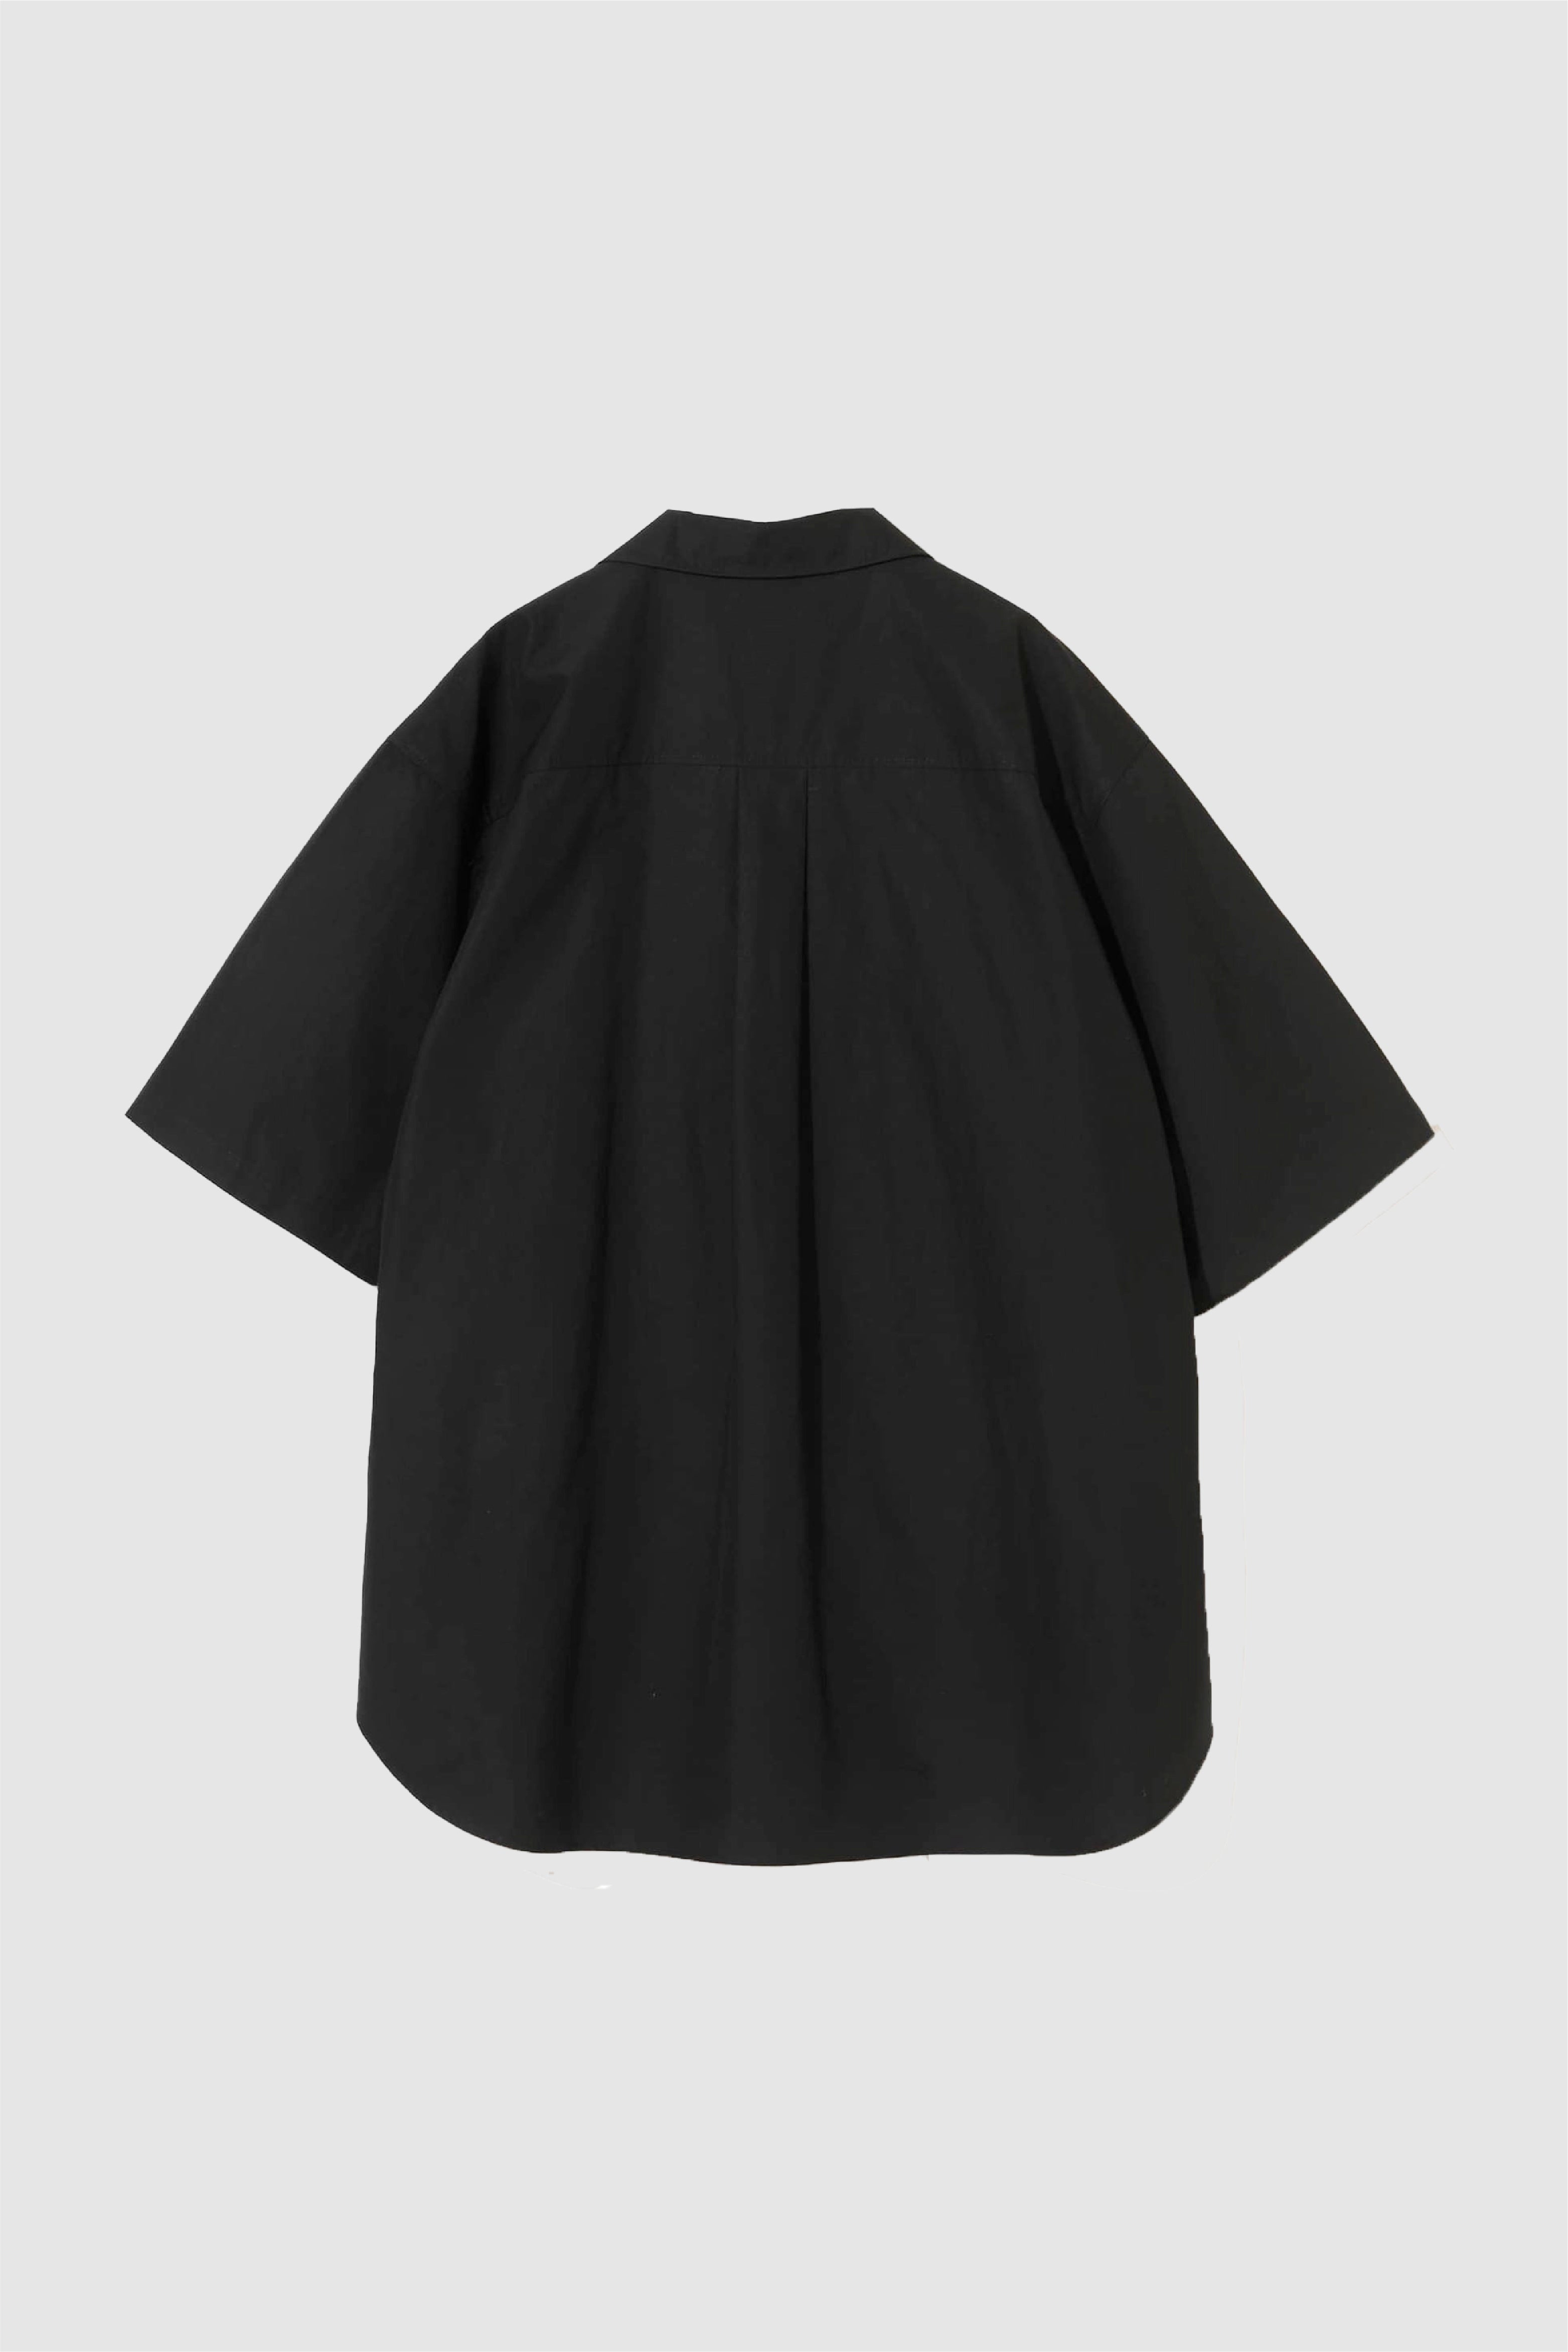 Selectshop FRAME - UNDERCOVER Rebel Shirt Shirts Concept Store Dubai